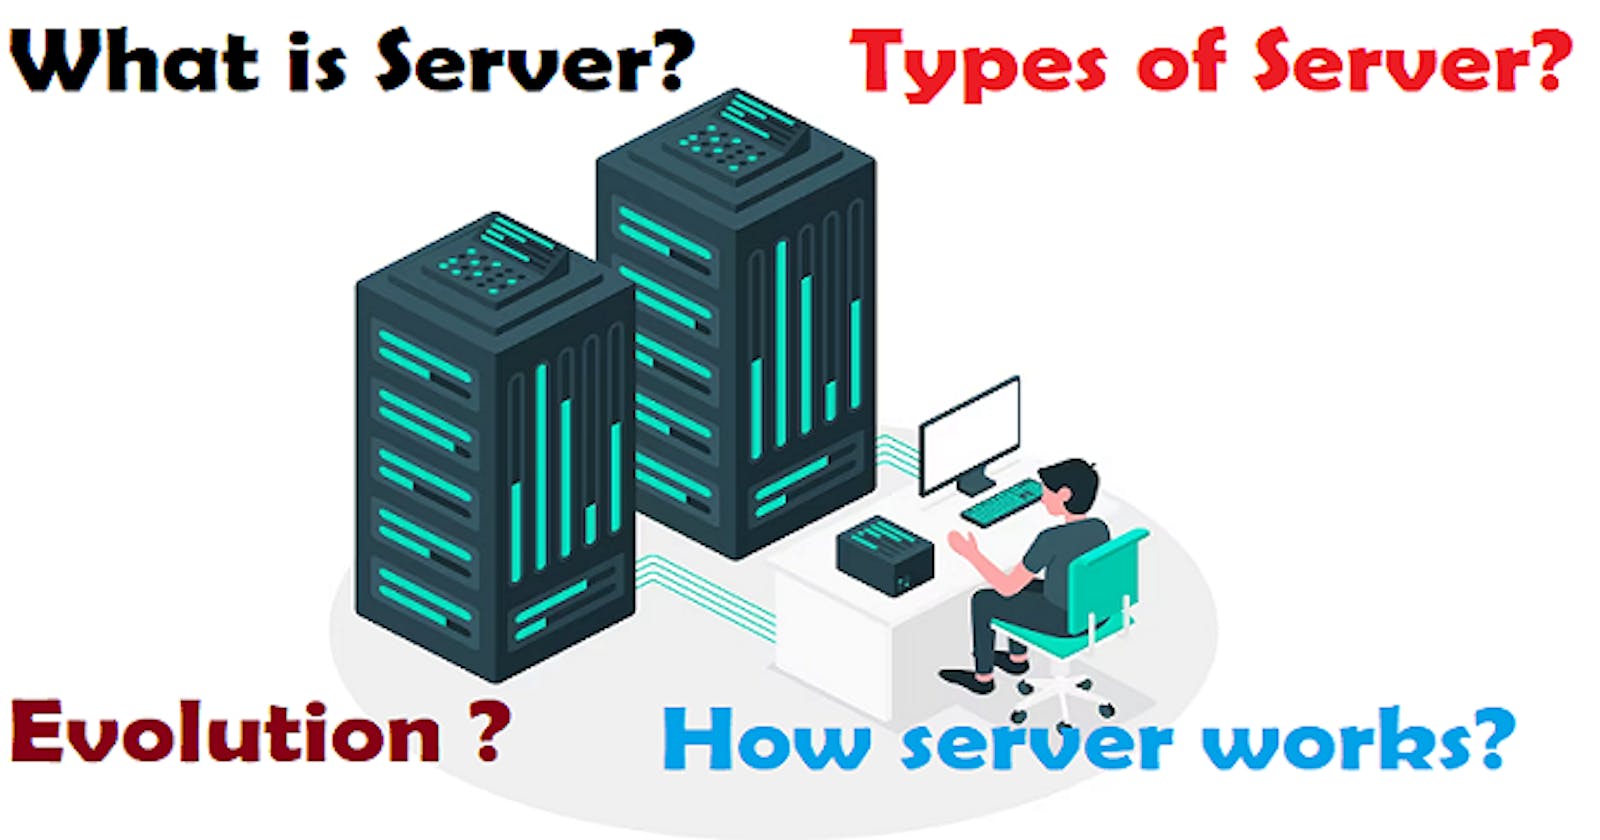 Linux Servers: We should know as a DevOps Engineer